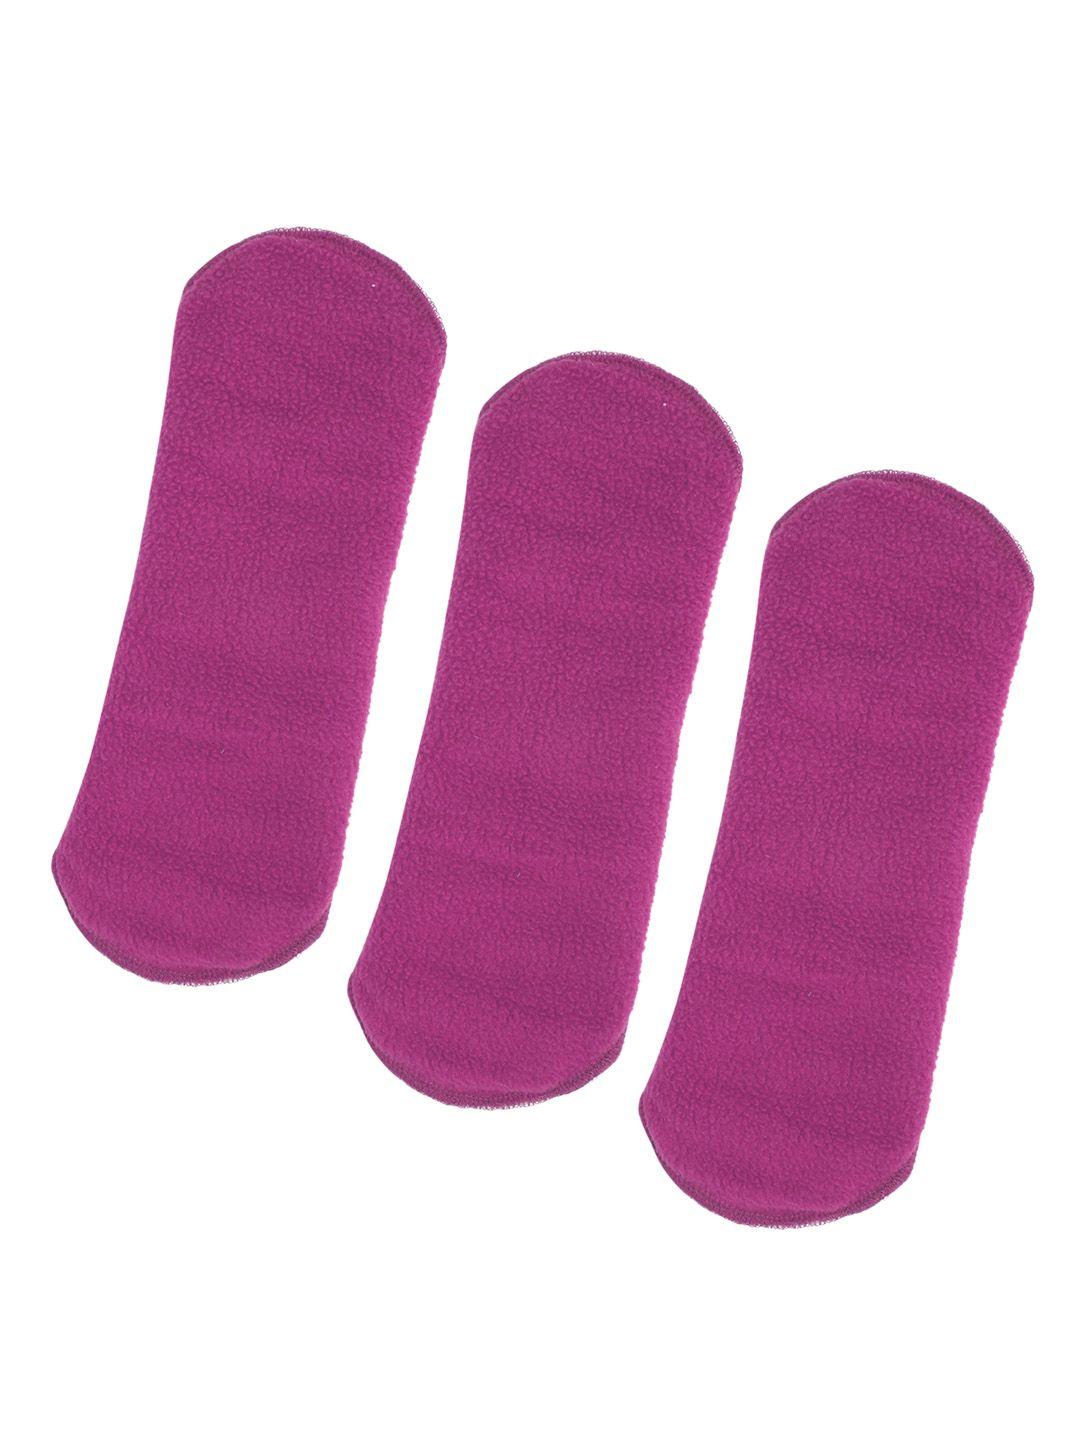 caredone set of 3 reusable sanitary cotton cloth pads